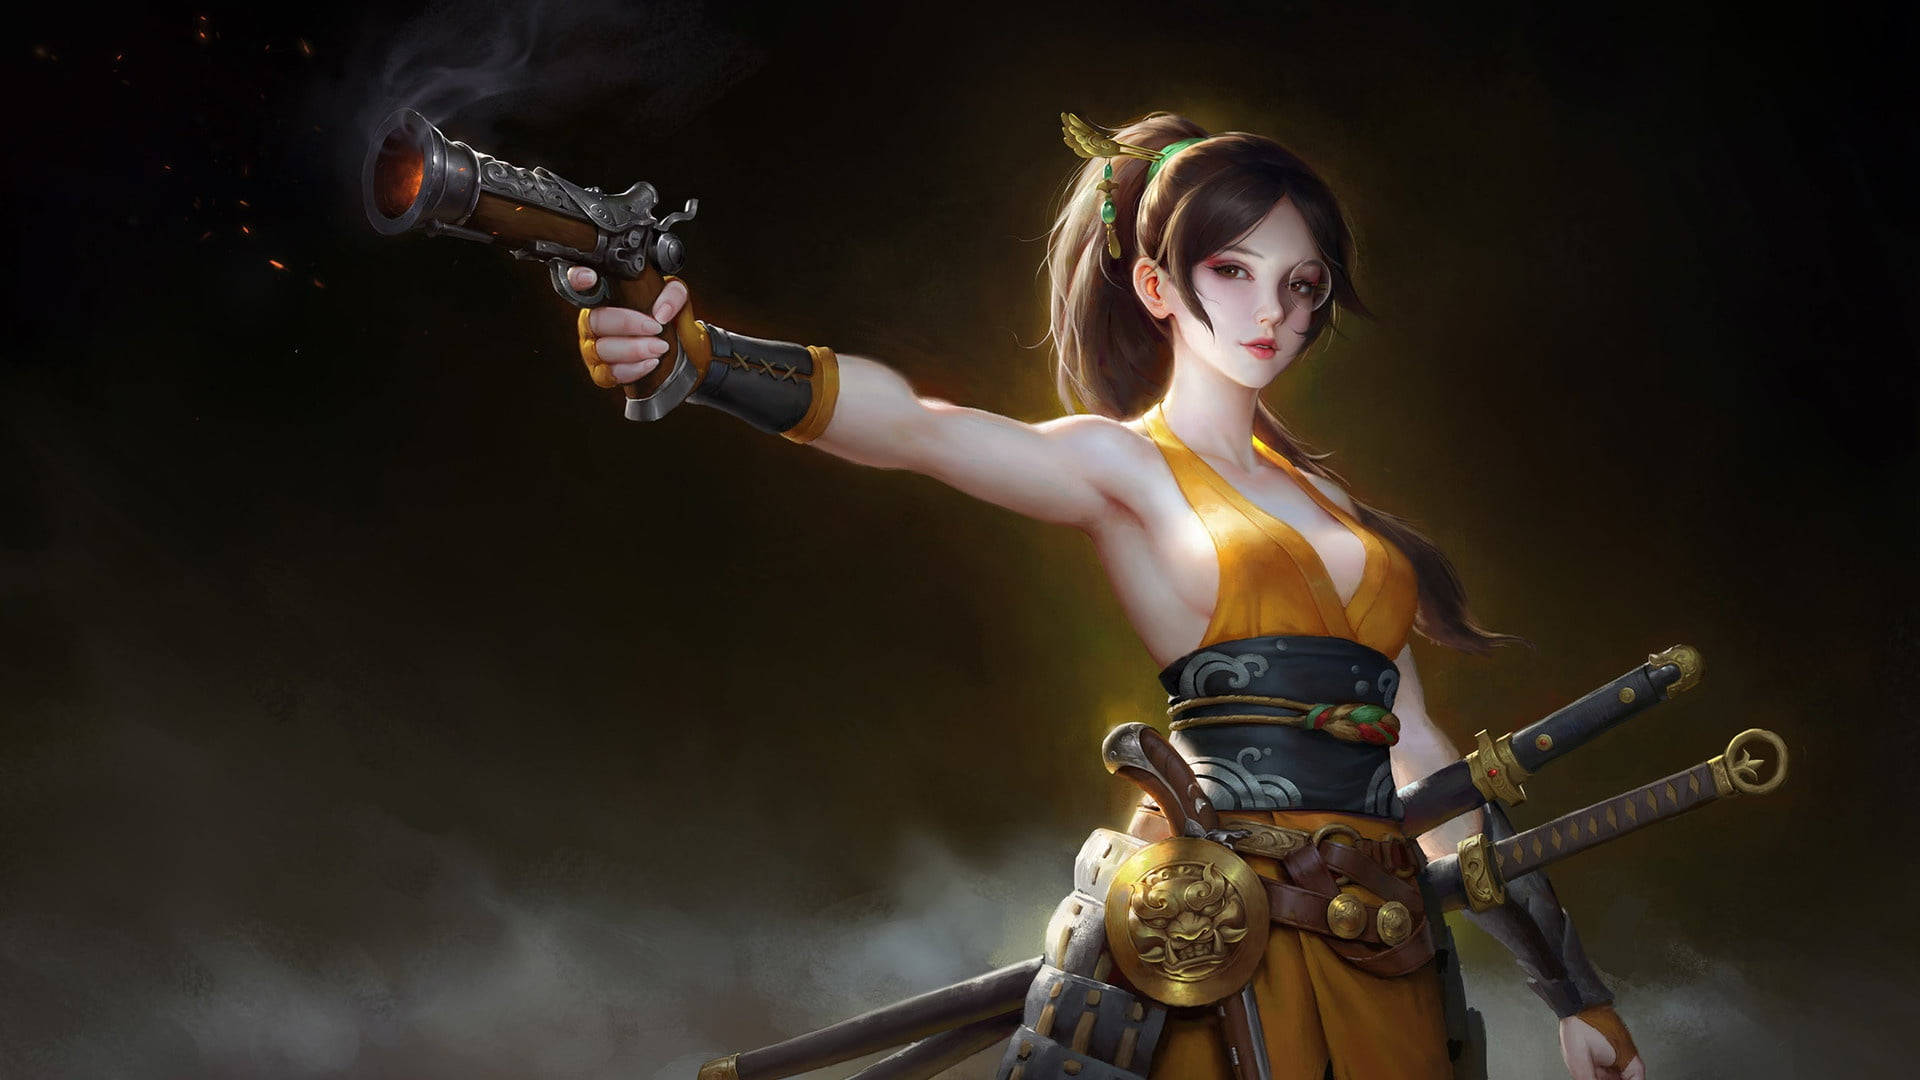 Samurai Girl With Gun Wallpaper